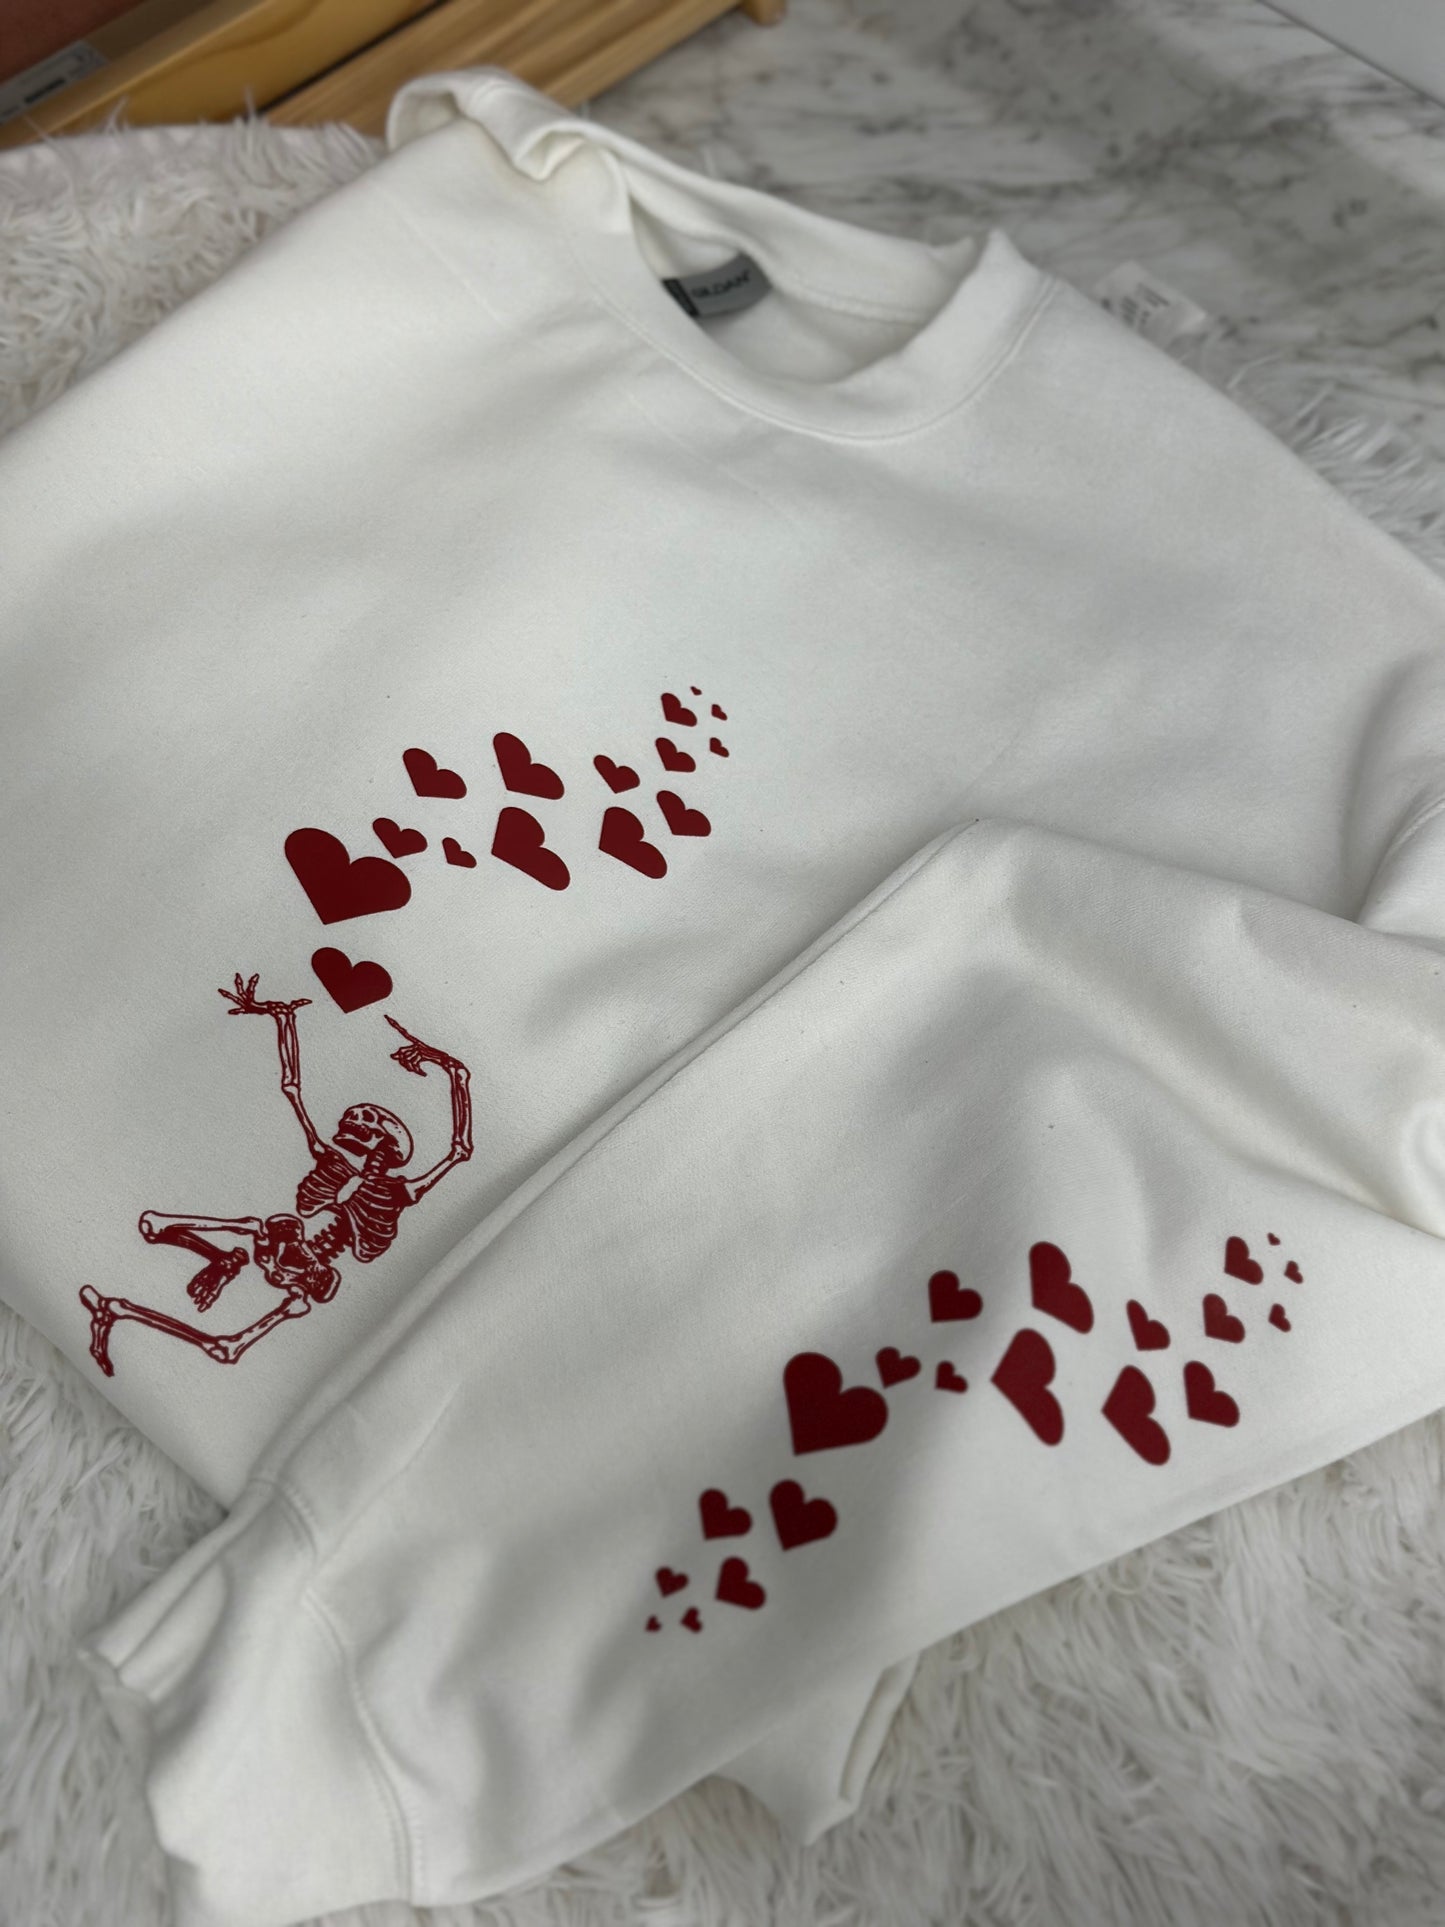 Skeleton Hearts Crewneck Sweatshirt